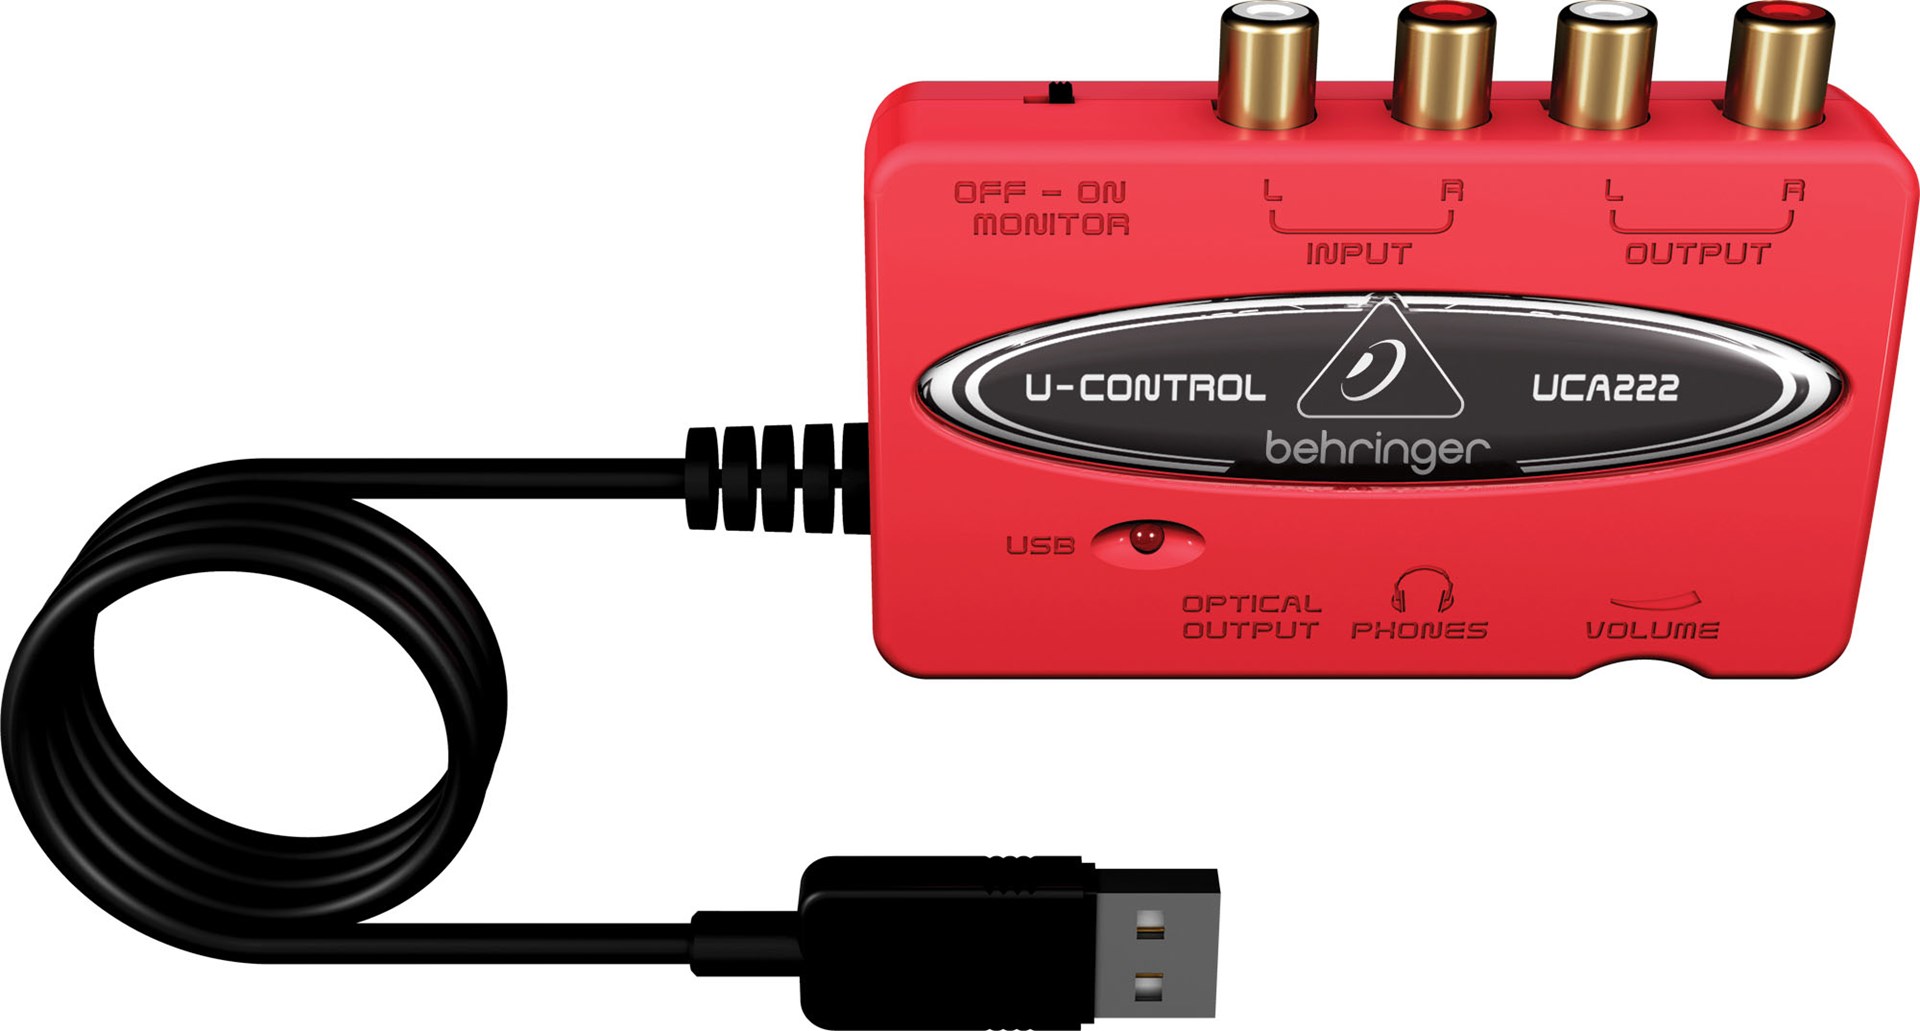 Osta tuote Behringer UCA222 – Interfejs USB verkkokaupastamme Korhone 10% alennuksella koodilla KORHONE